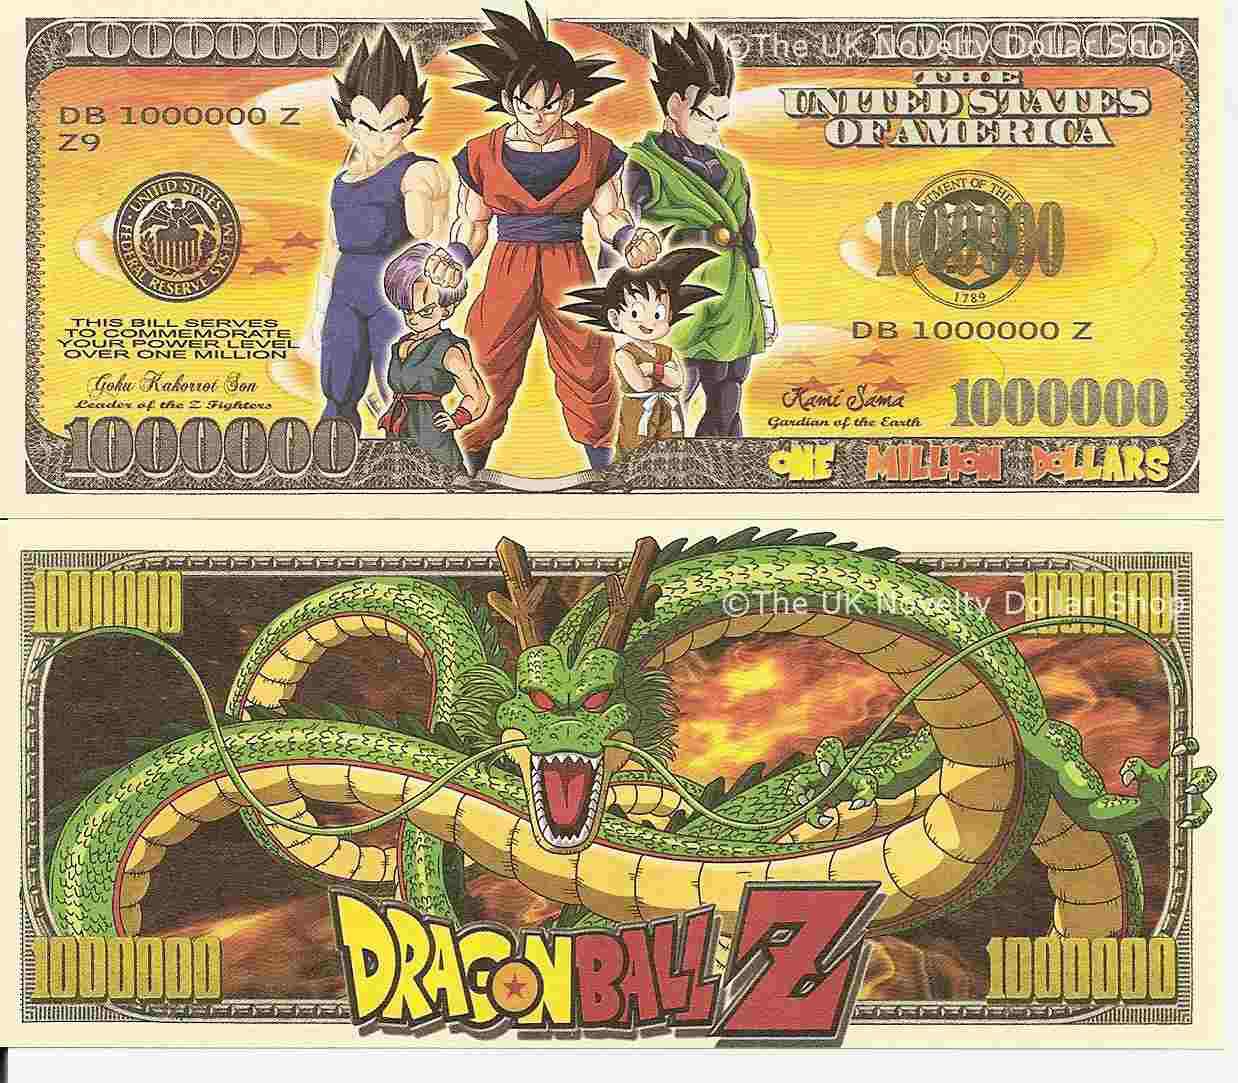 Dragonball Z Power Level Million Dollar Bills x 2 Japanese Anime Television DBZ